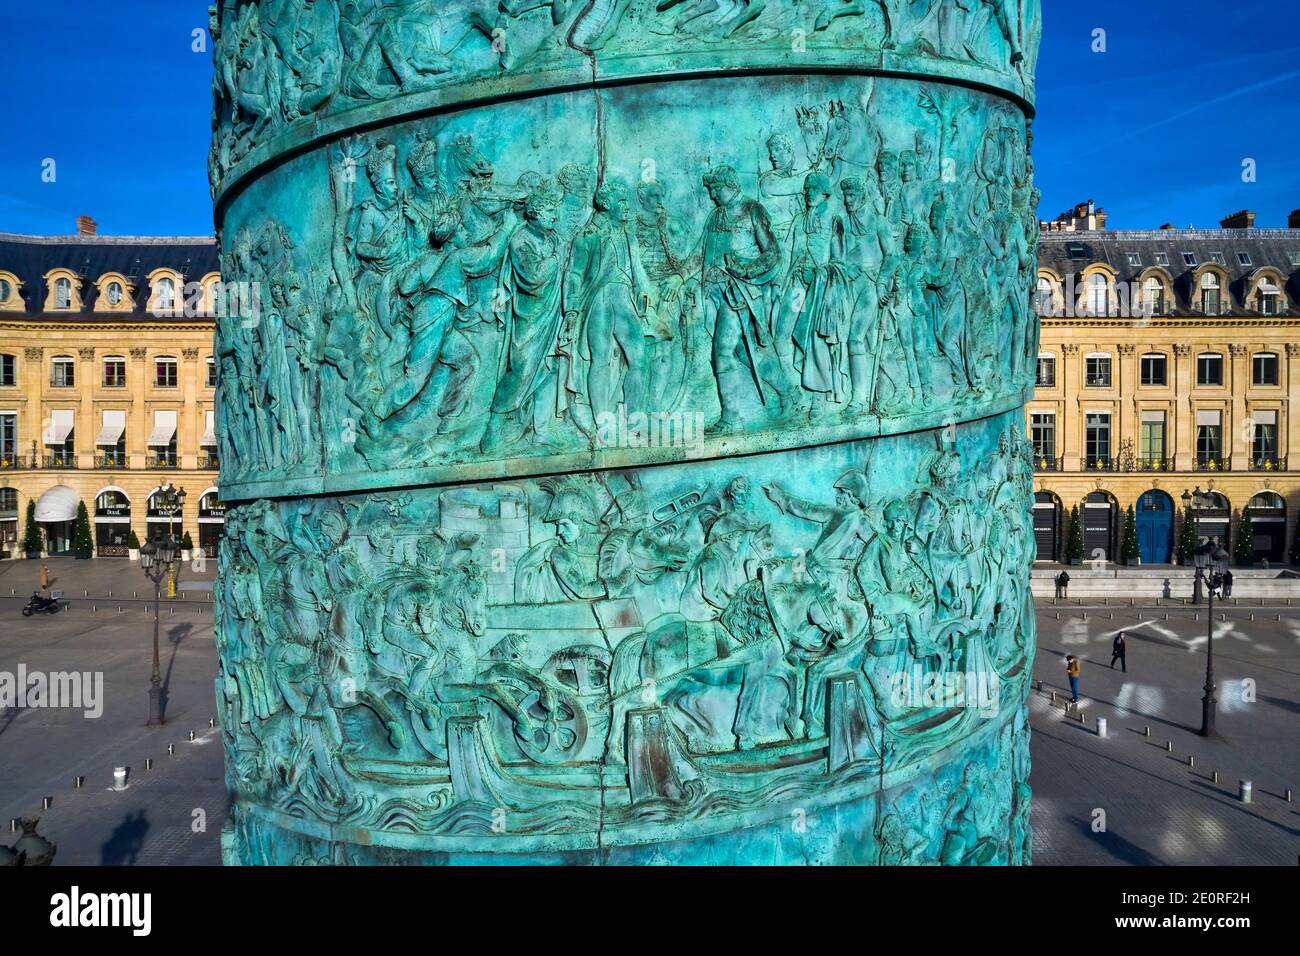 France, Paris, Place Vendome, the Vendome column with the statue of Napoleon as Caesar by Auguste Dumont Stock Photo